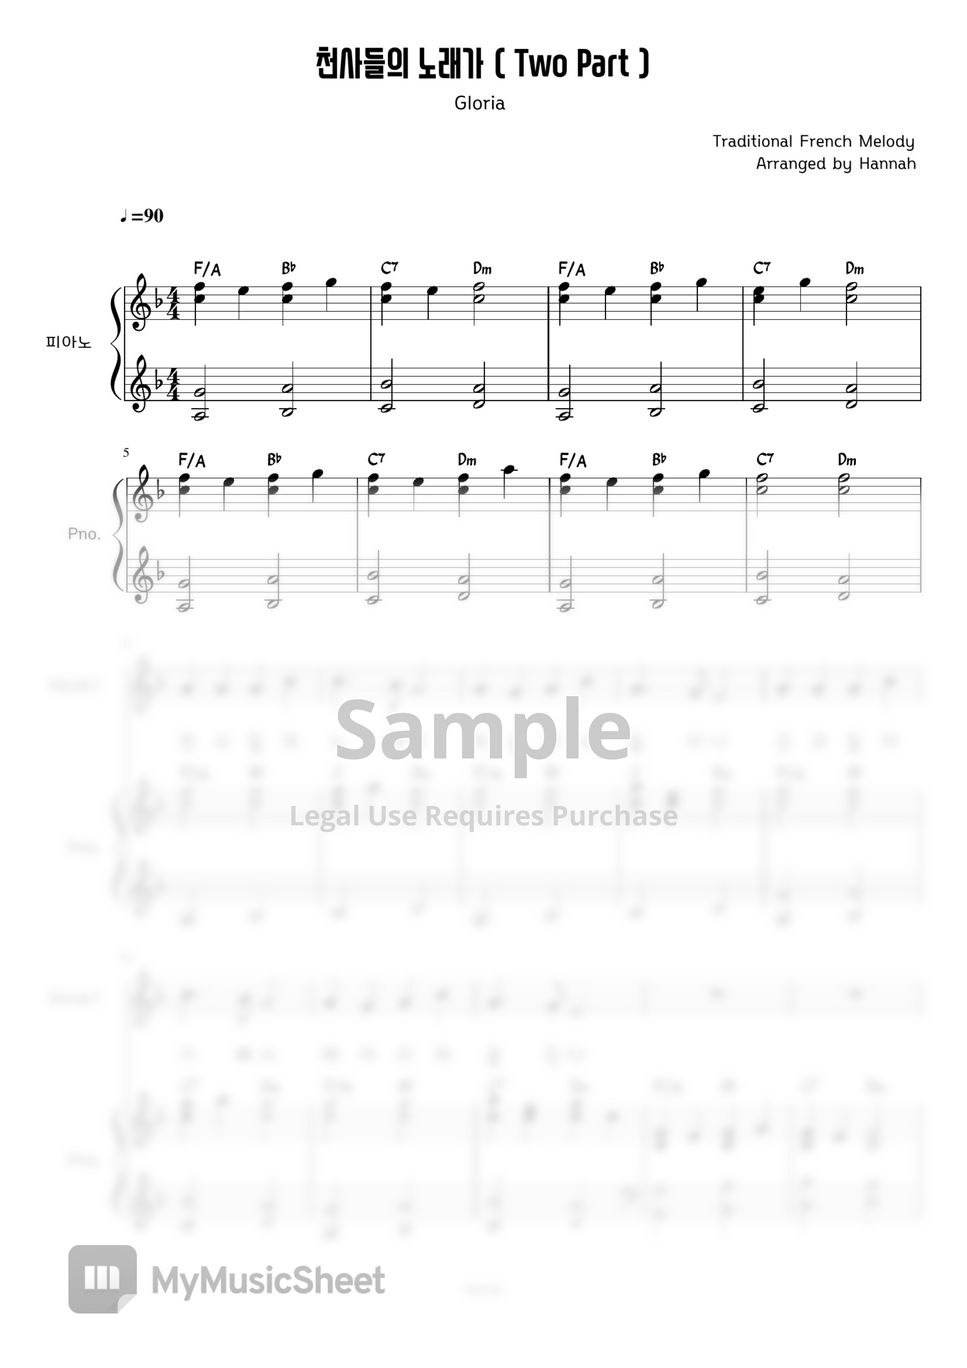 Traditional French Melody - 천사들의 노래가 Gloria (2부+피아노) by Hannah